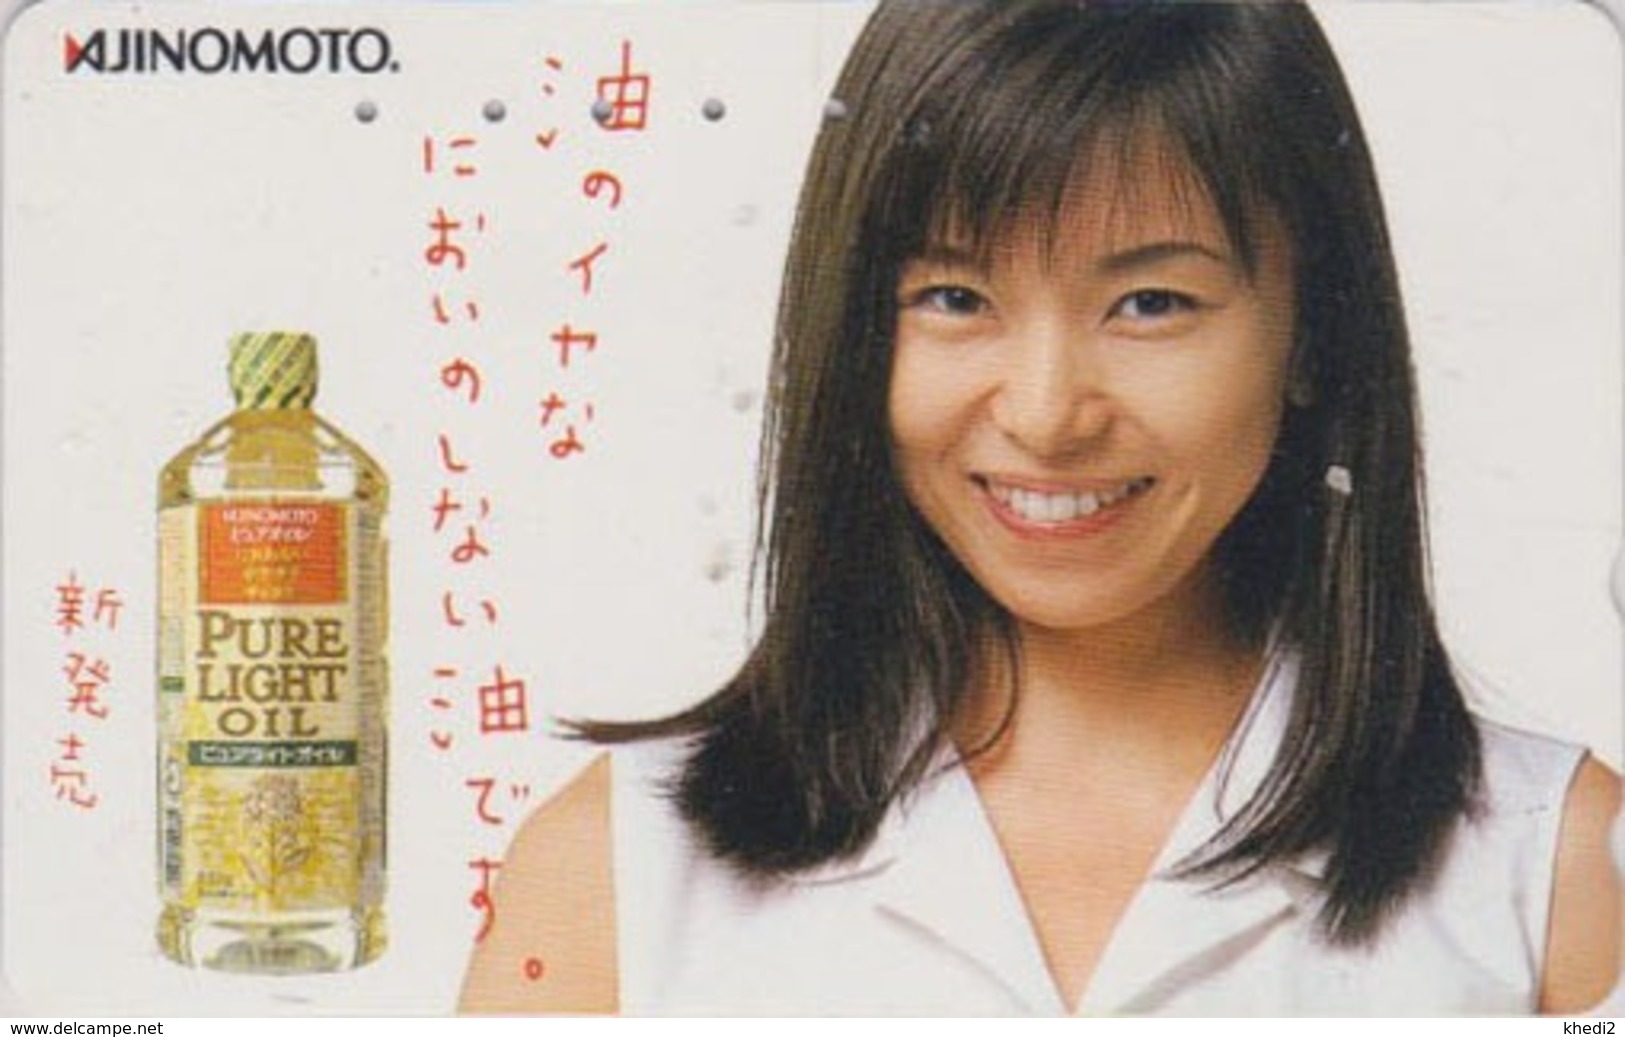 Télécarte Japon / 110-016 - FEMME Pub AJINOMOTO - ACTRESS GIRL Food Adv. Japan Phonecard - Knorr 6170 - Alimentation